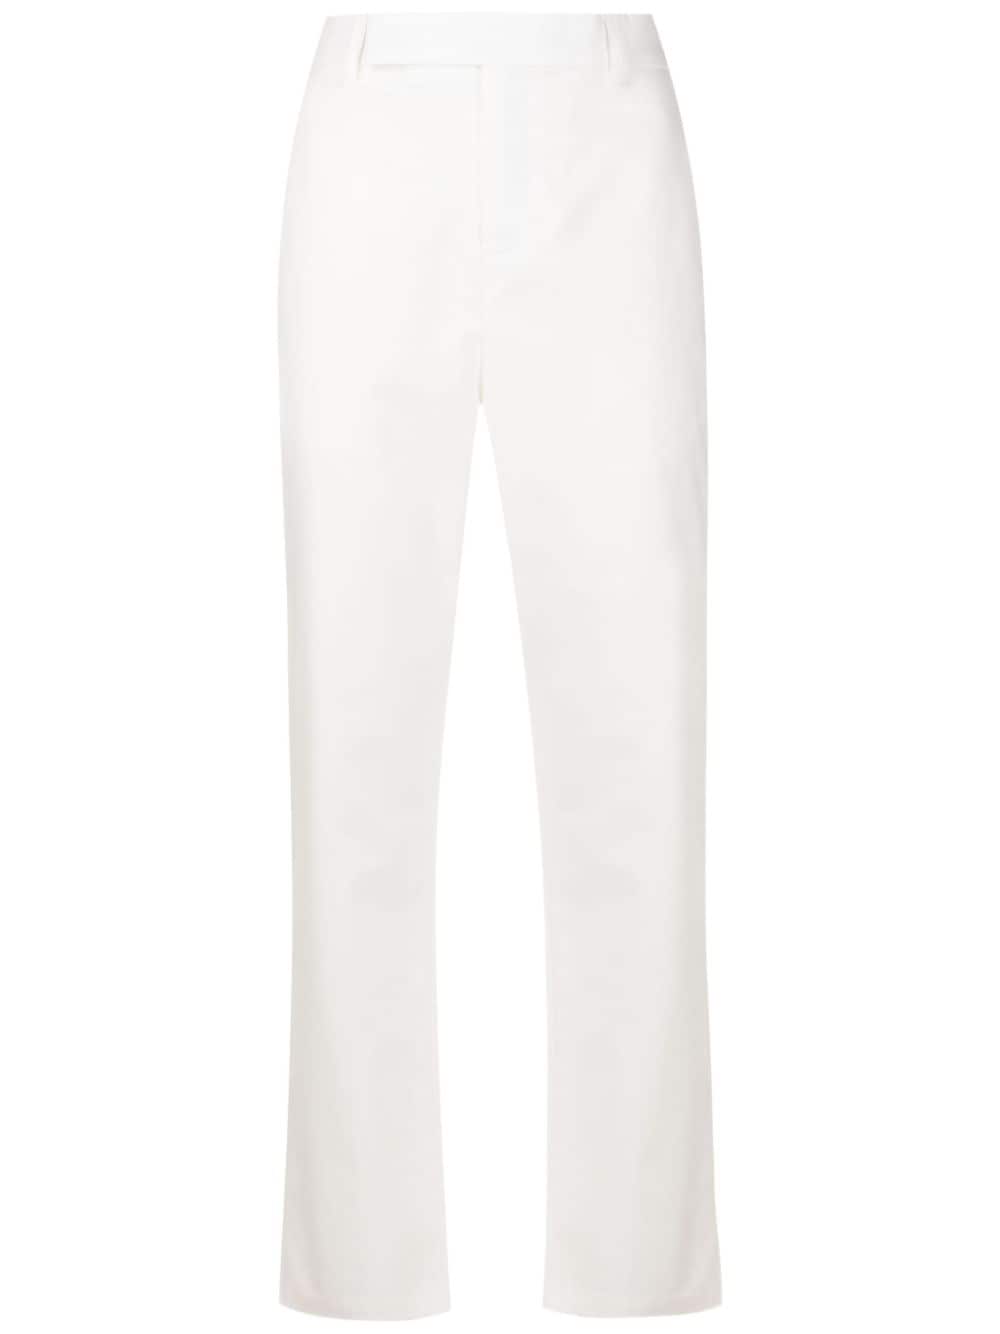 Uma | Raquel Davidowicz off-centre fastening trousers - White von Uma | Raquel Davidowicz